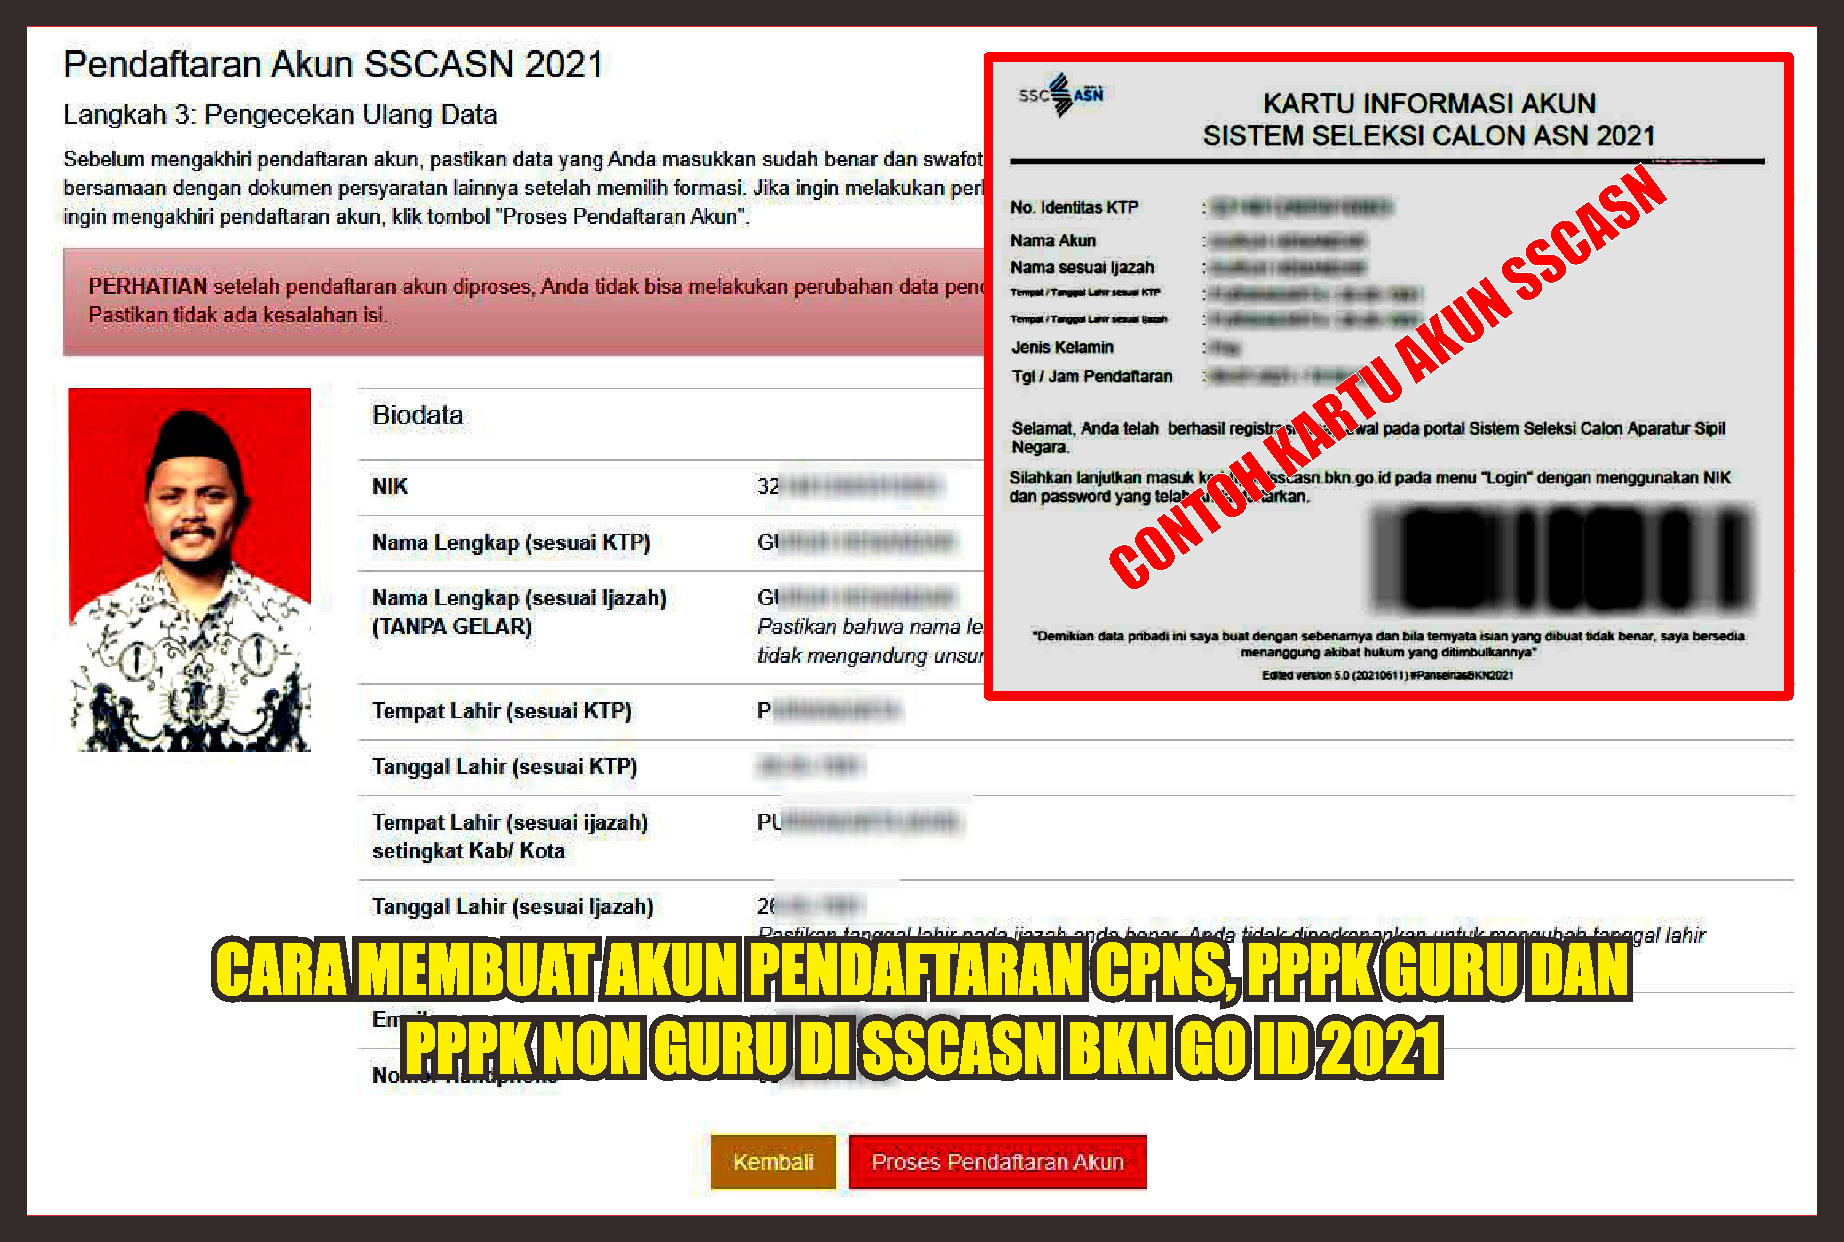 Sscn bkn go id 2021 pppk